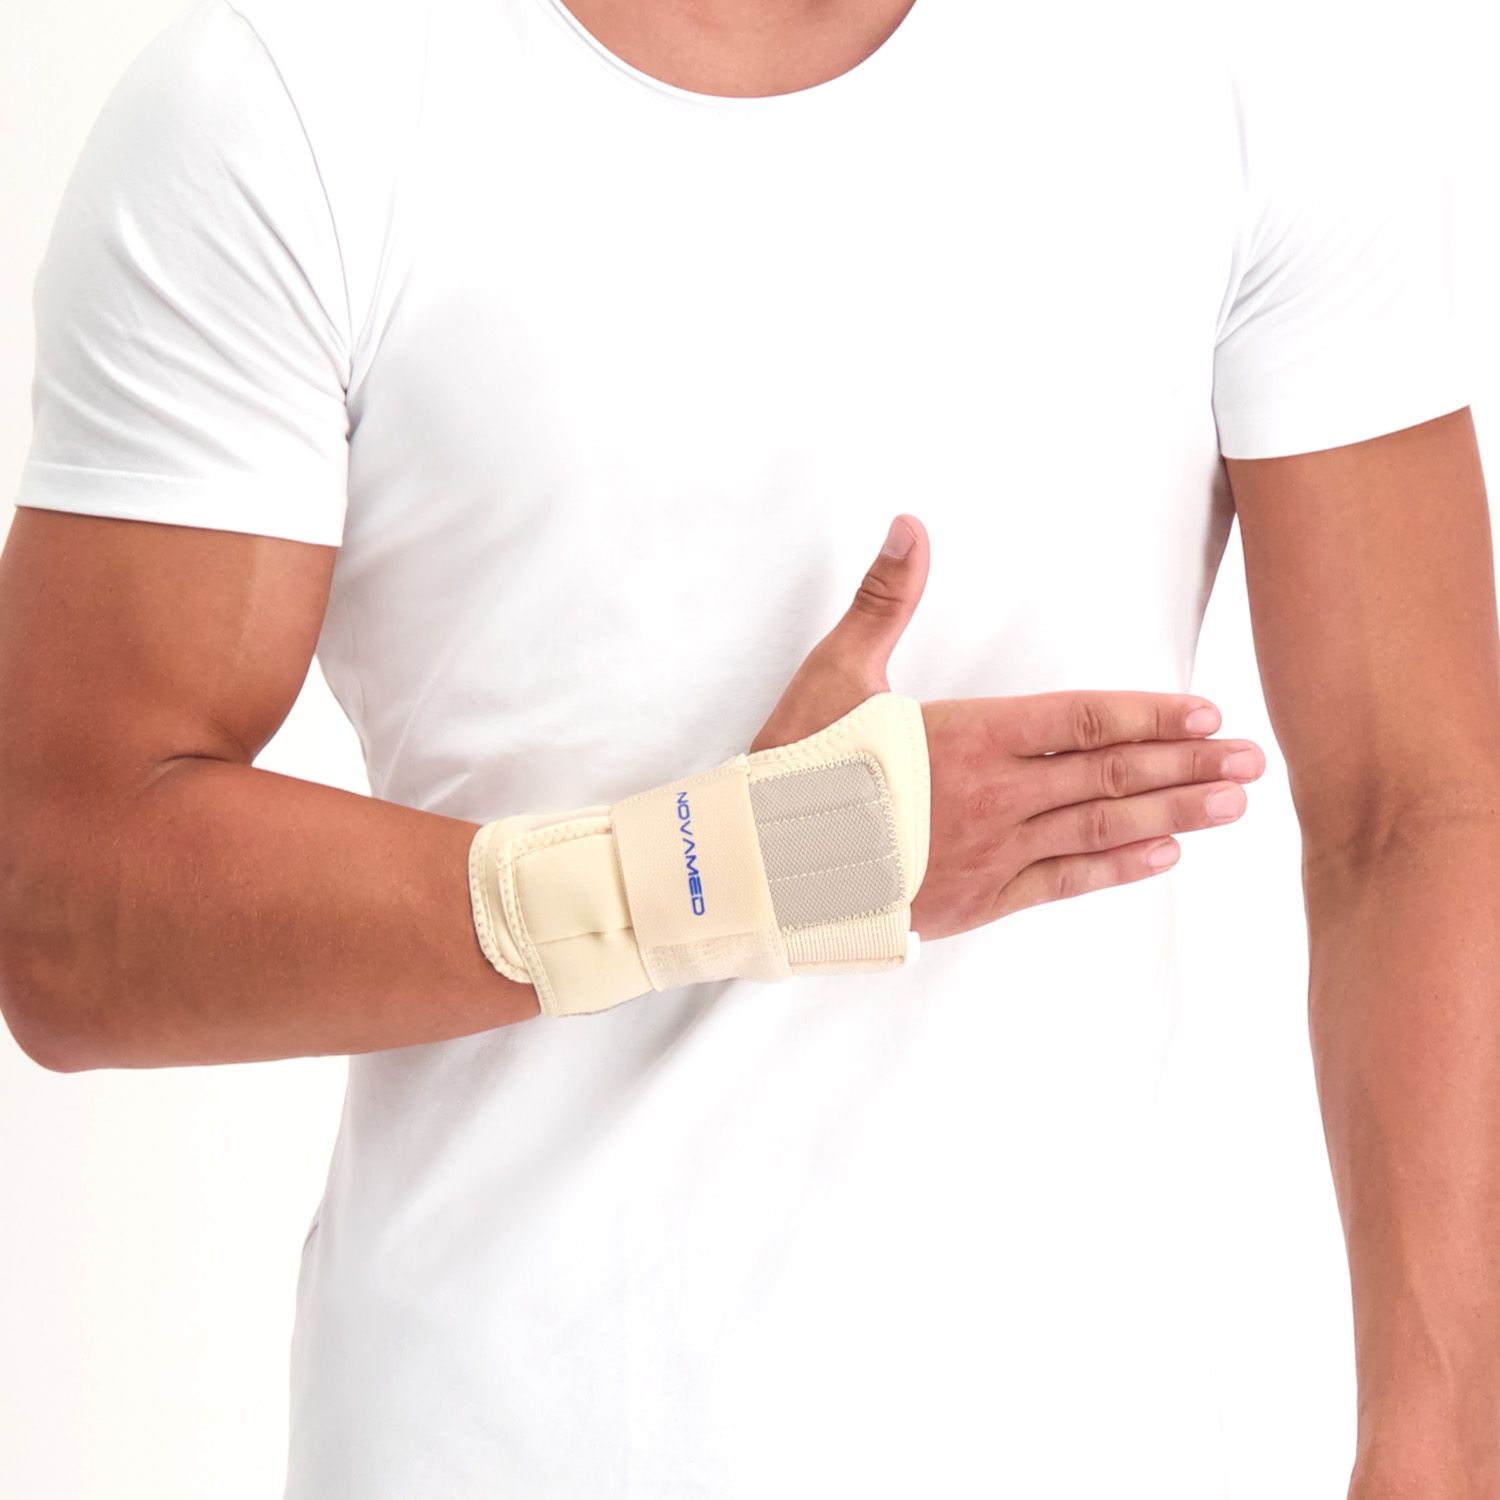 novamed lightweight wrist support beige